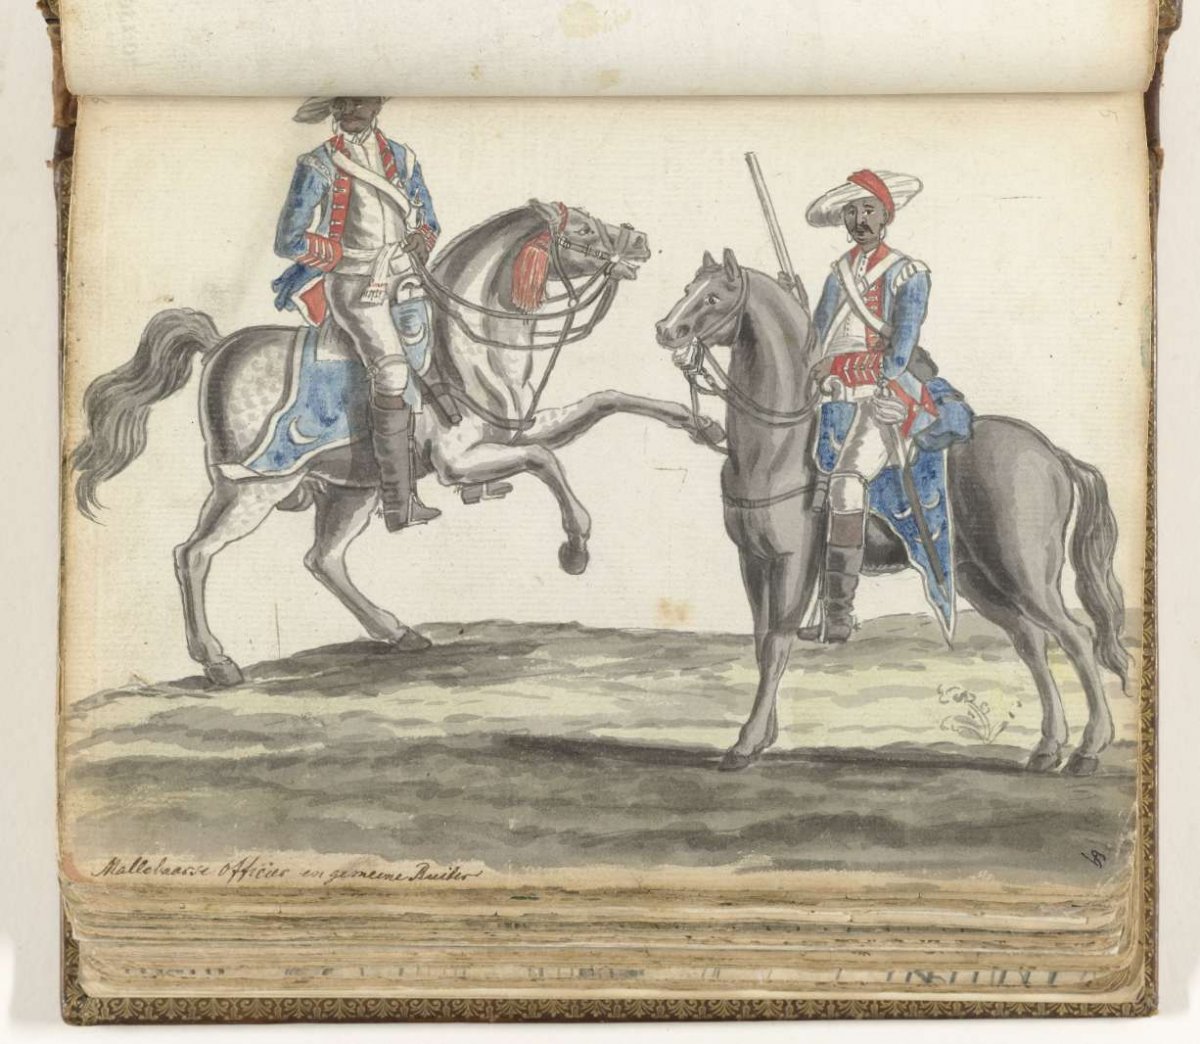 Mallabarian officer and rider, Jan Brandes, 1779 - 1785